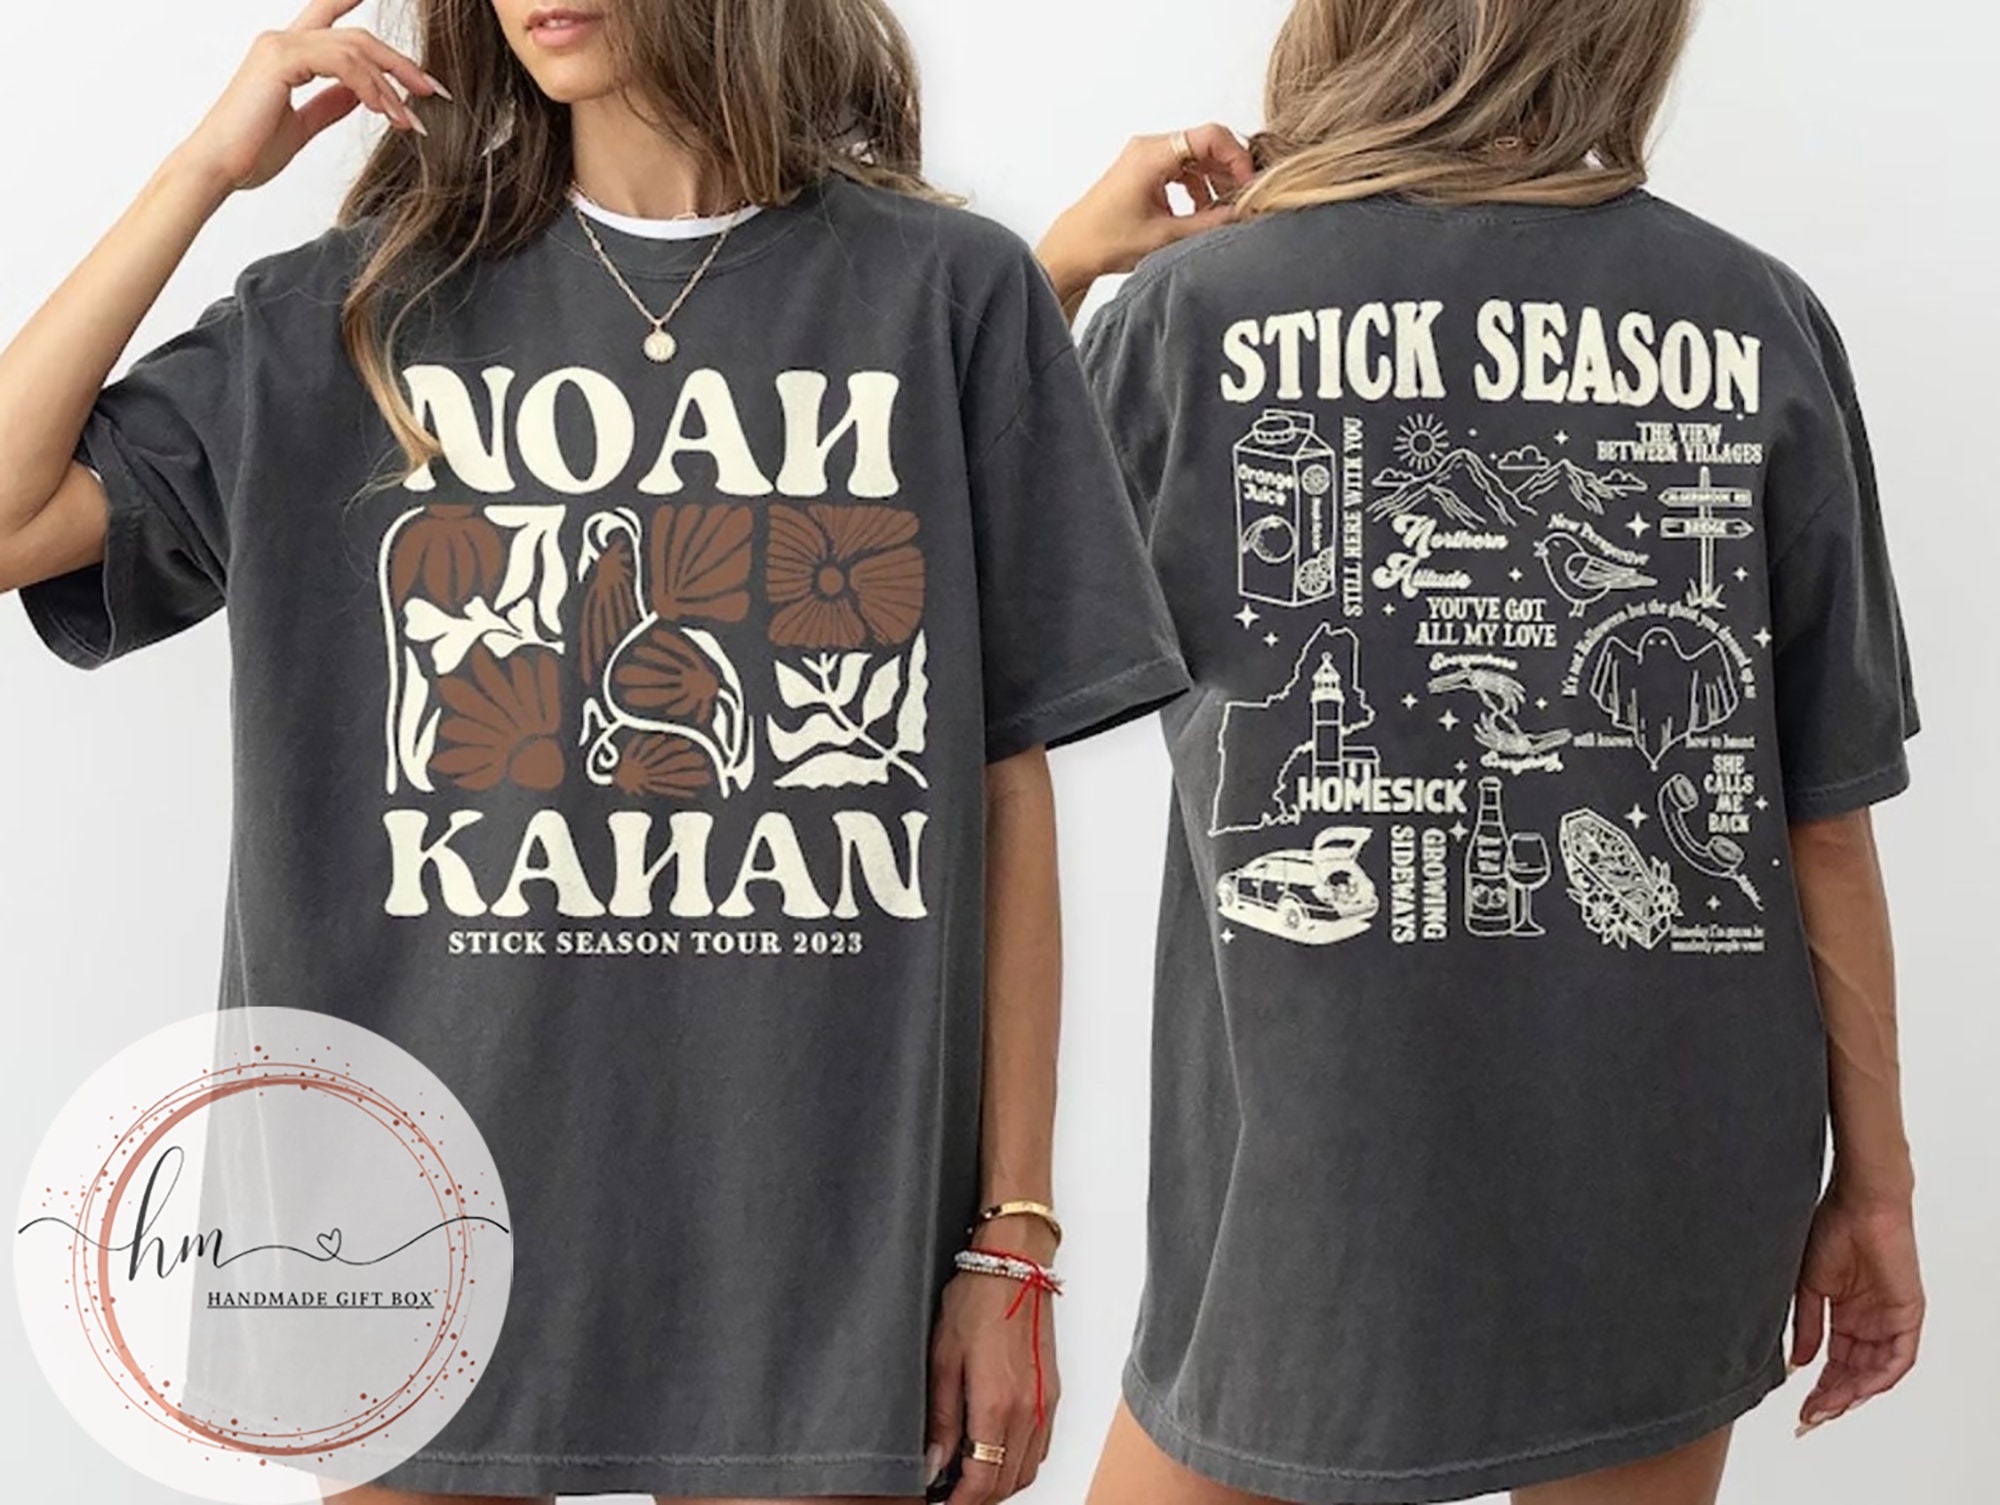 Vintage Stick Season 2023 Sweatshirt, Retro Noah Kahan Tour 2023 Shirt